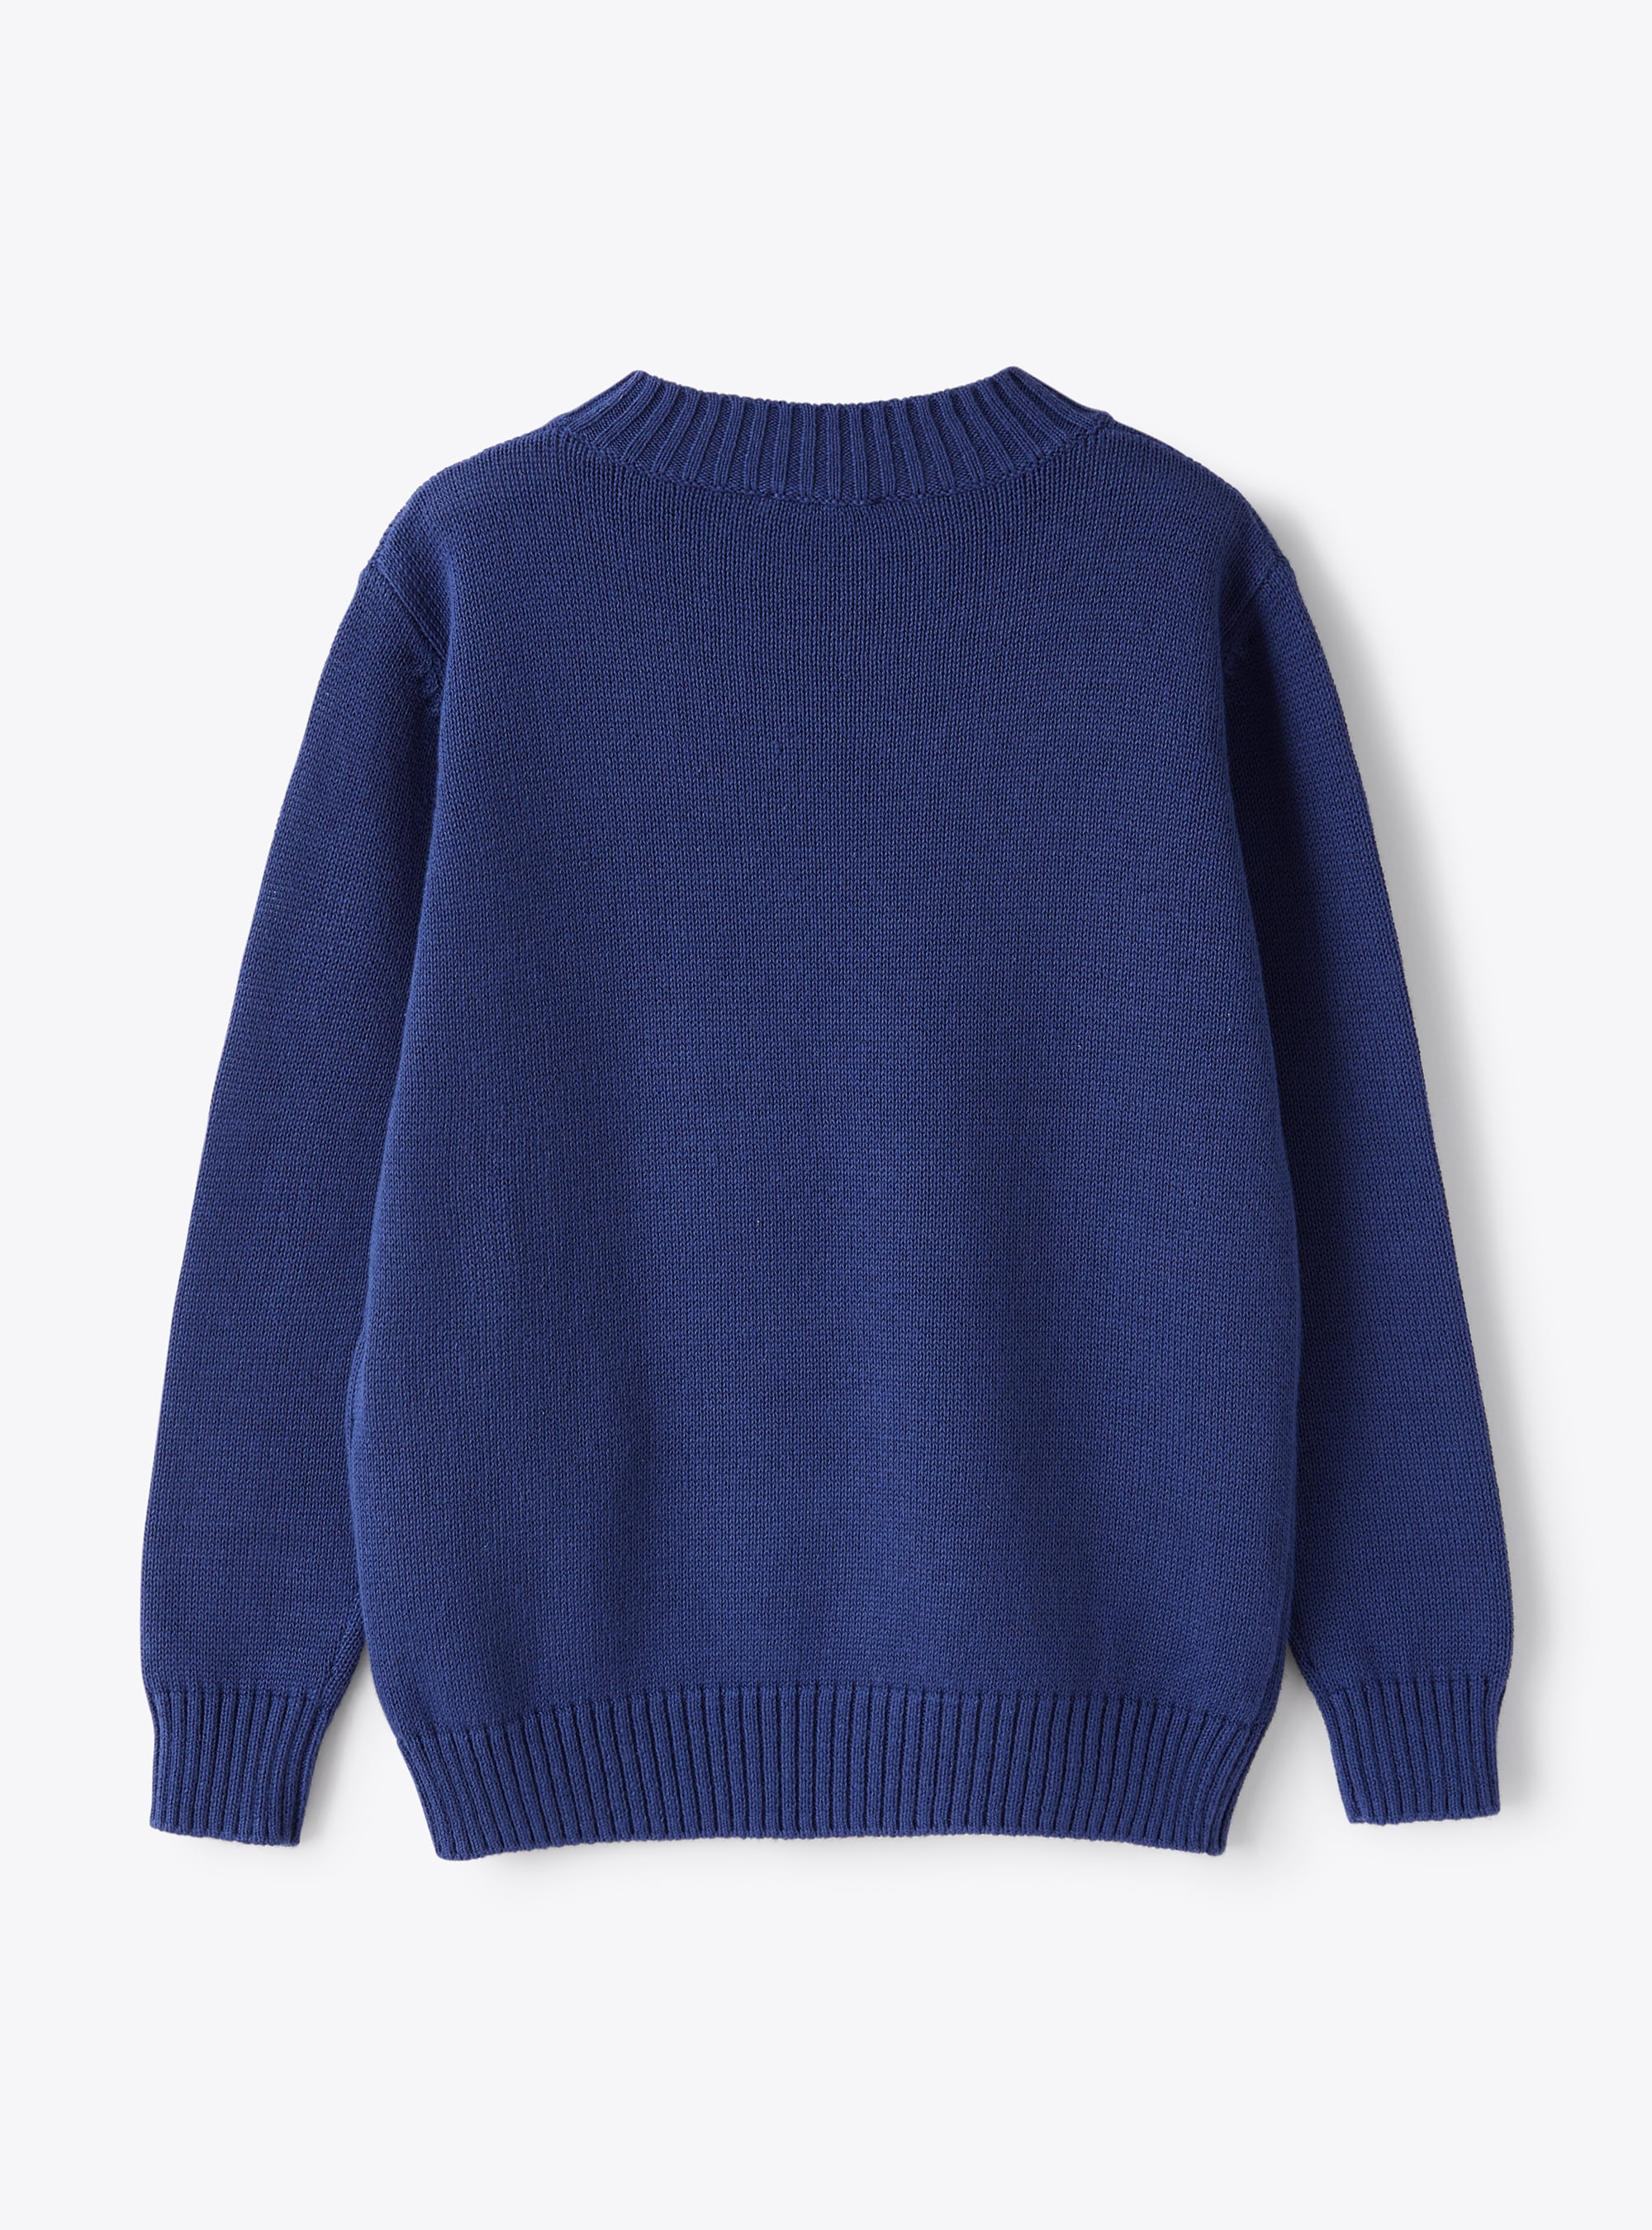 Jacquard sweater with sailor - Blue | Il Gufo